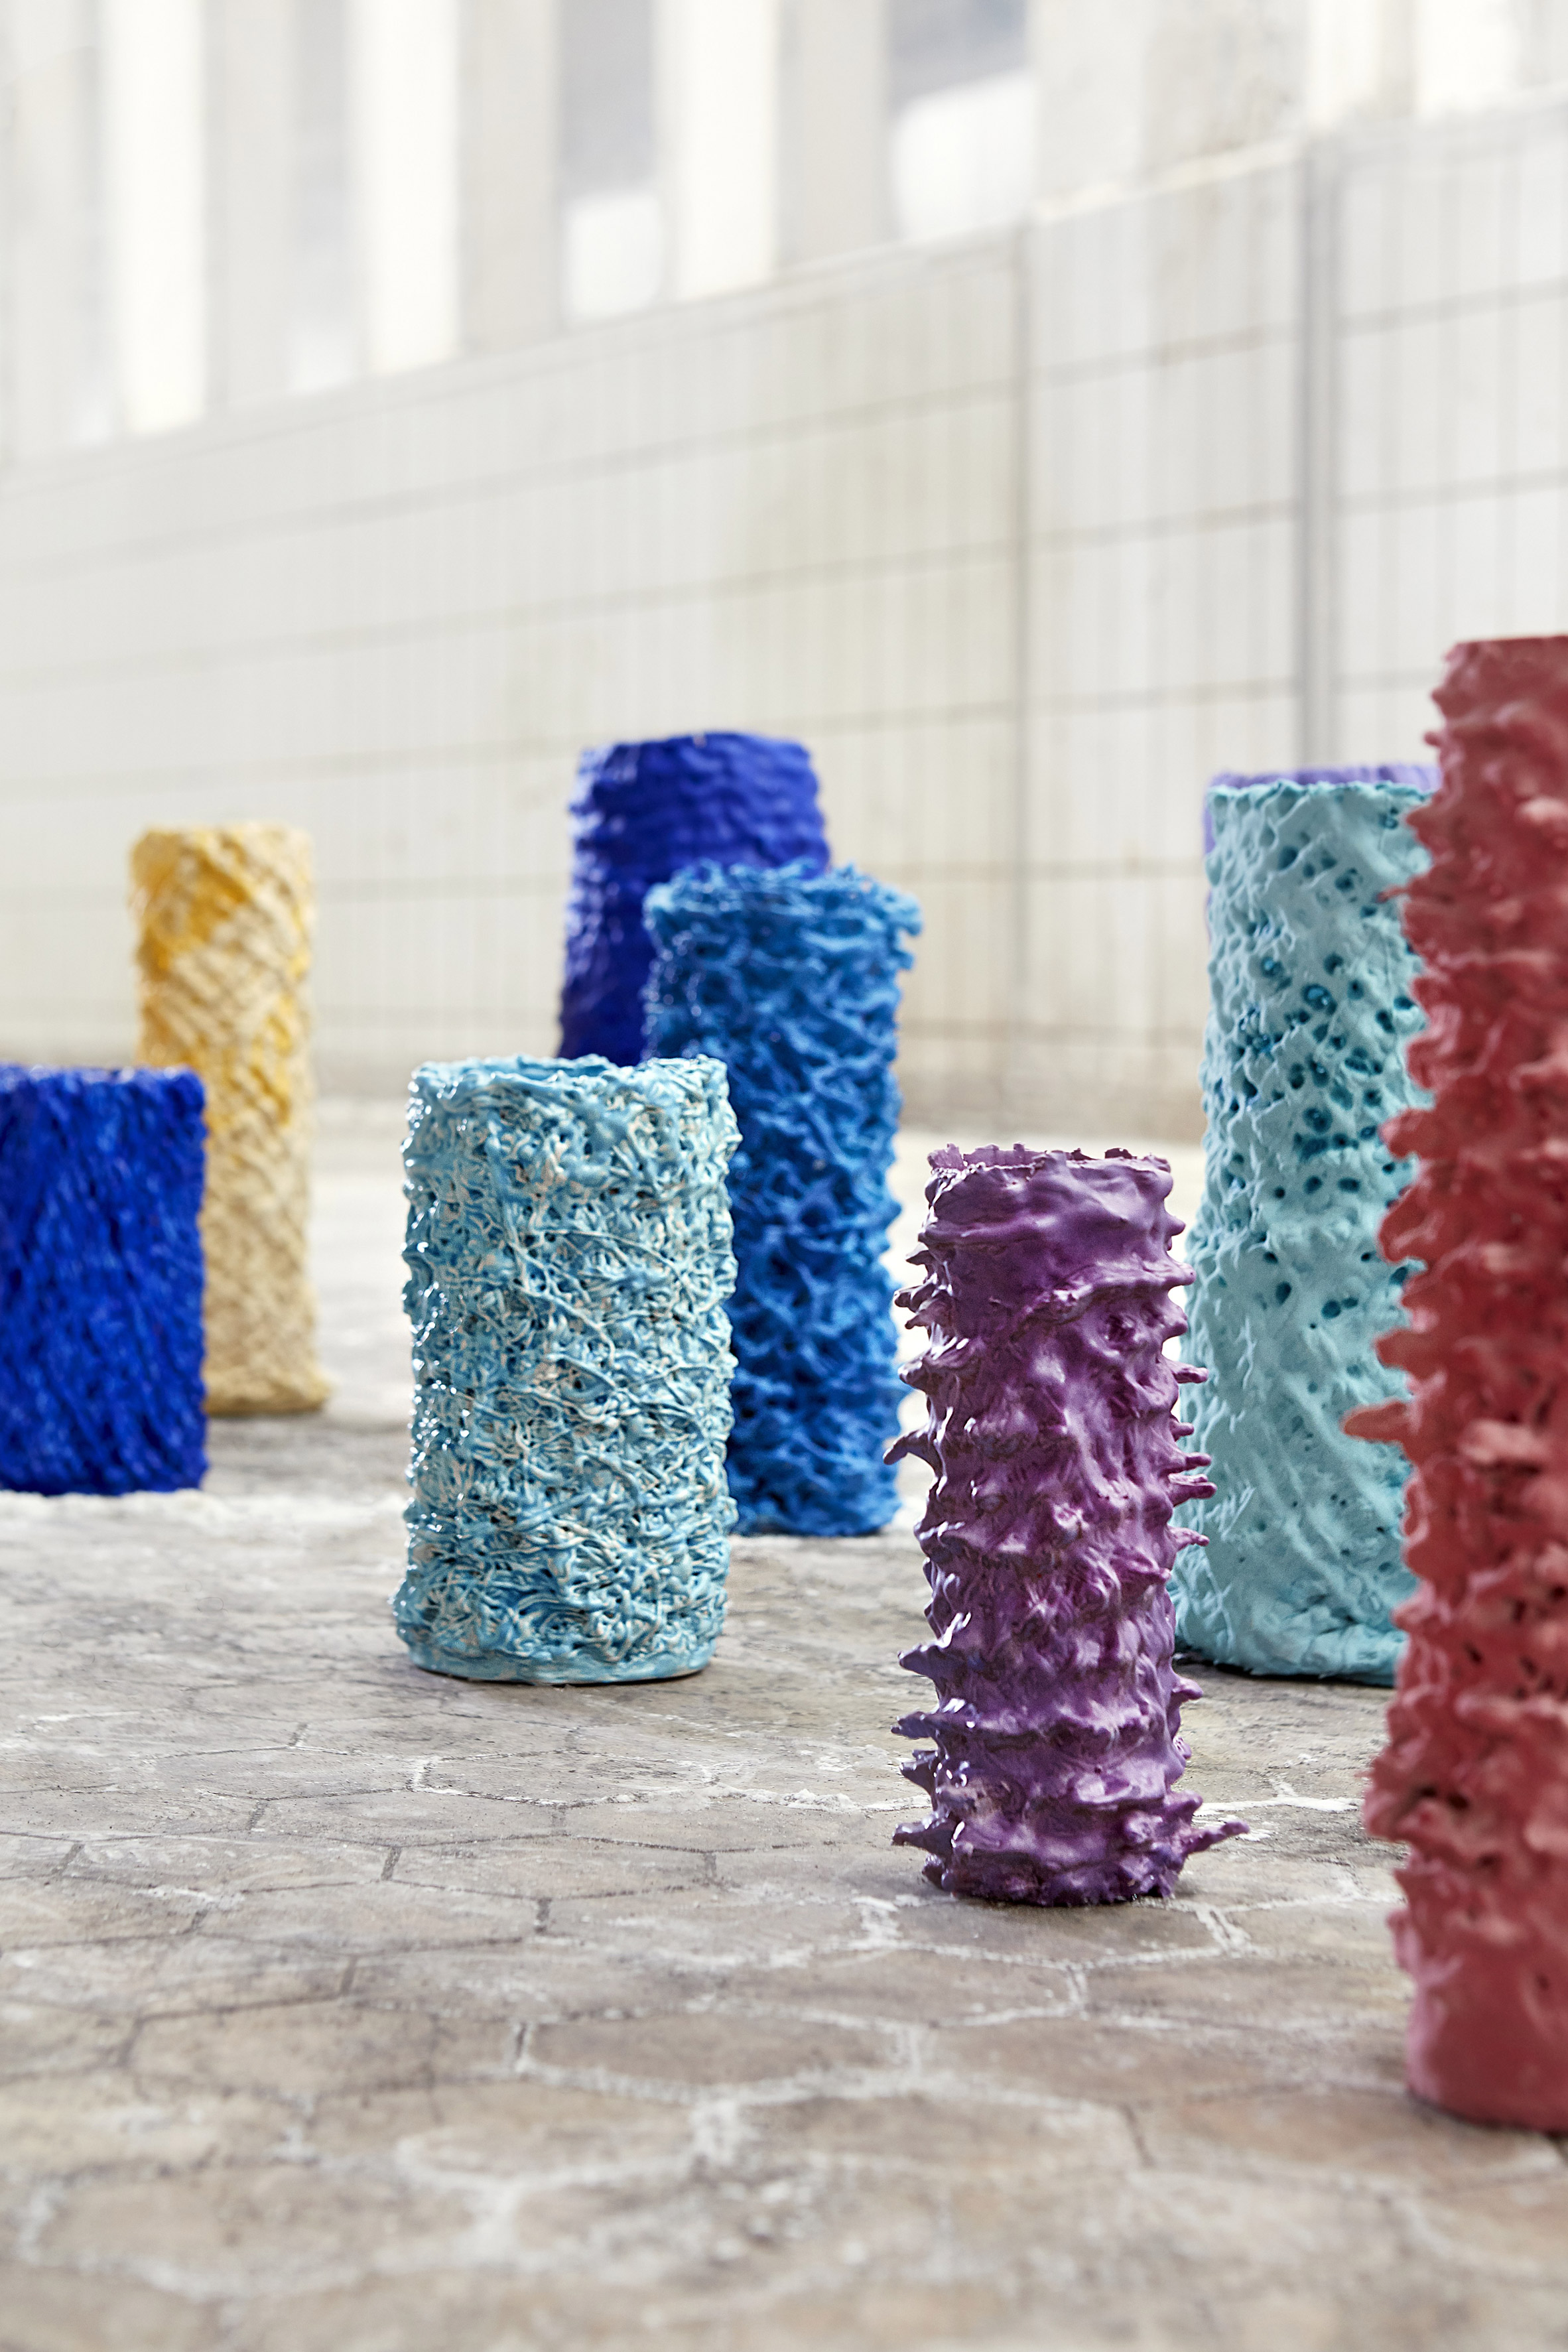 Erika Emeren uses Swedish spit-cake technique to create decorative vases